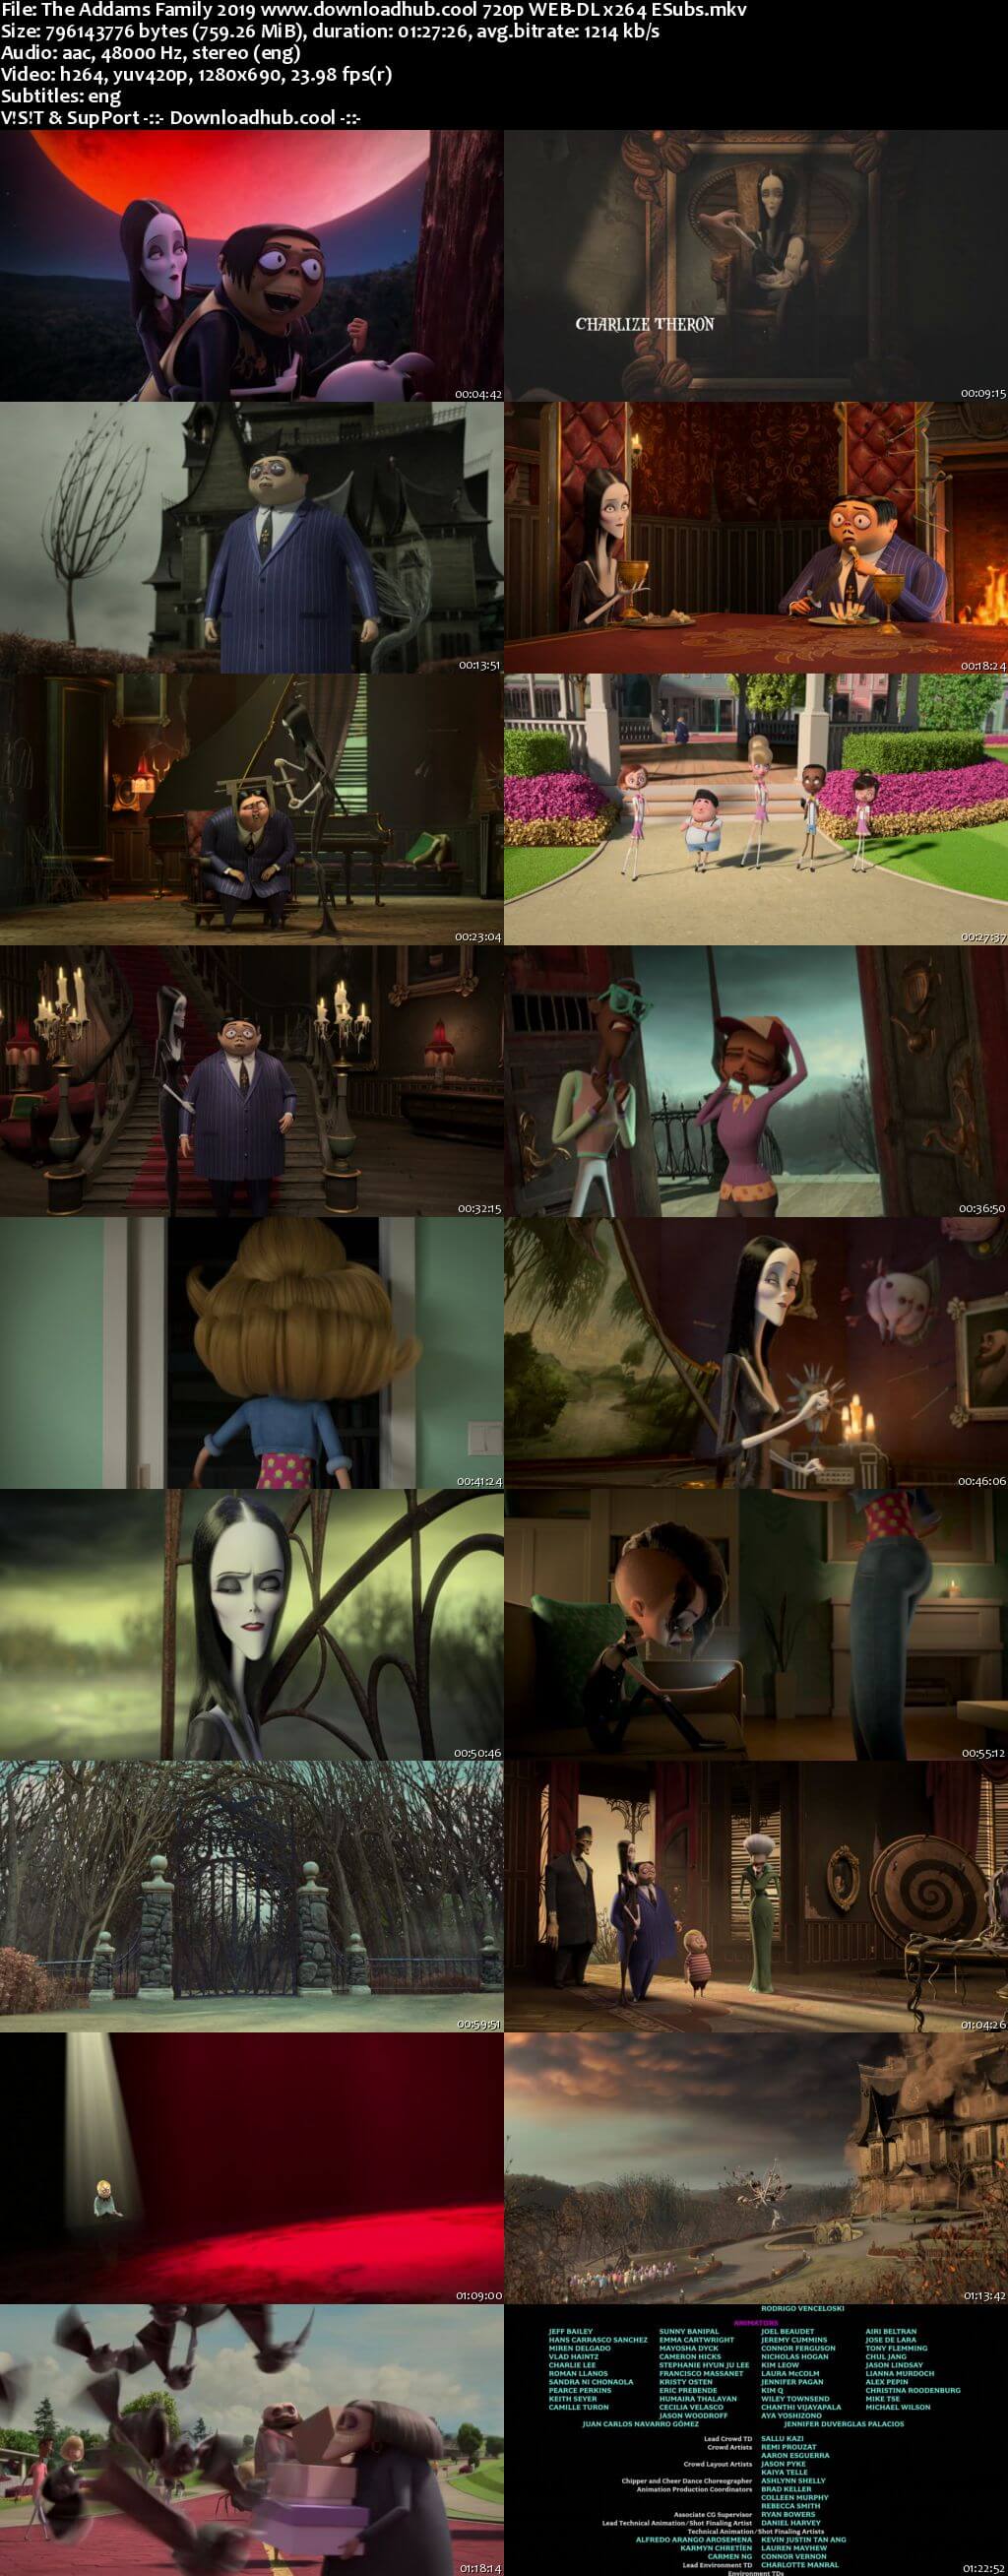 The Addams Family 2019 English 720p Web-DL 750MB ESubs